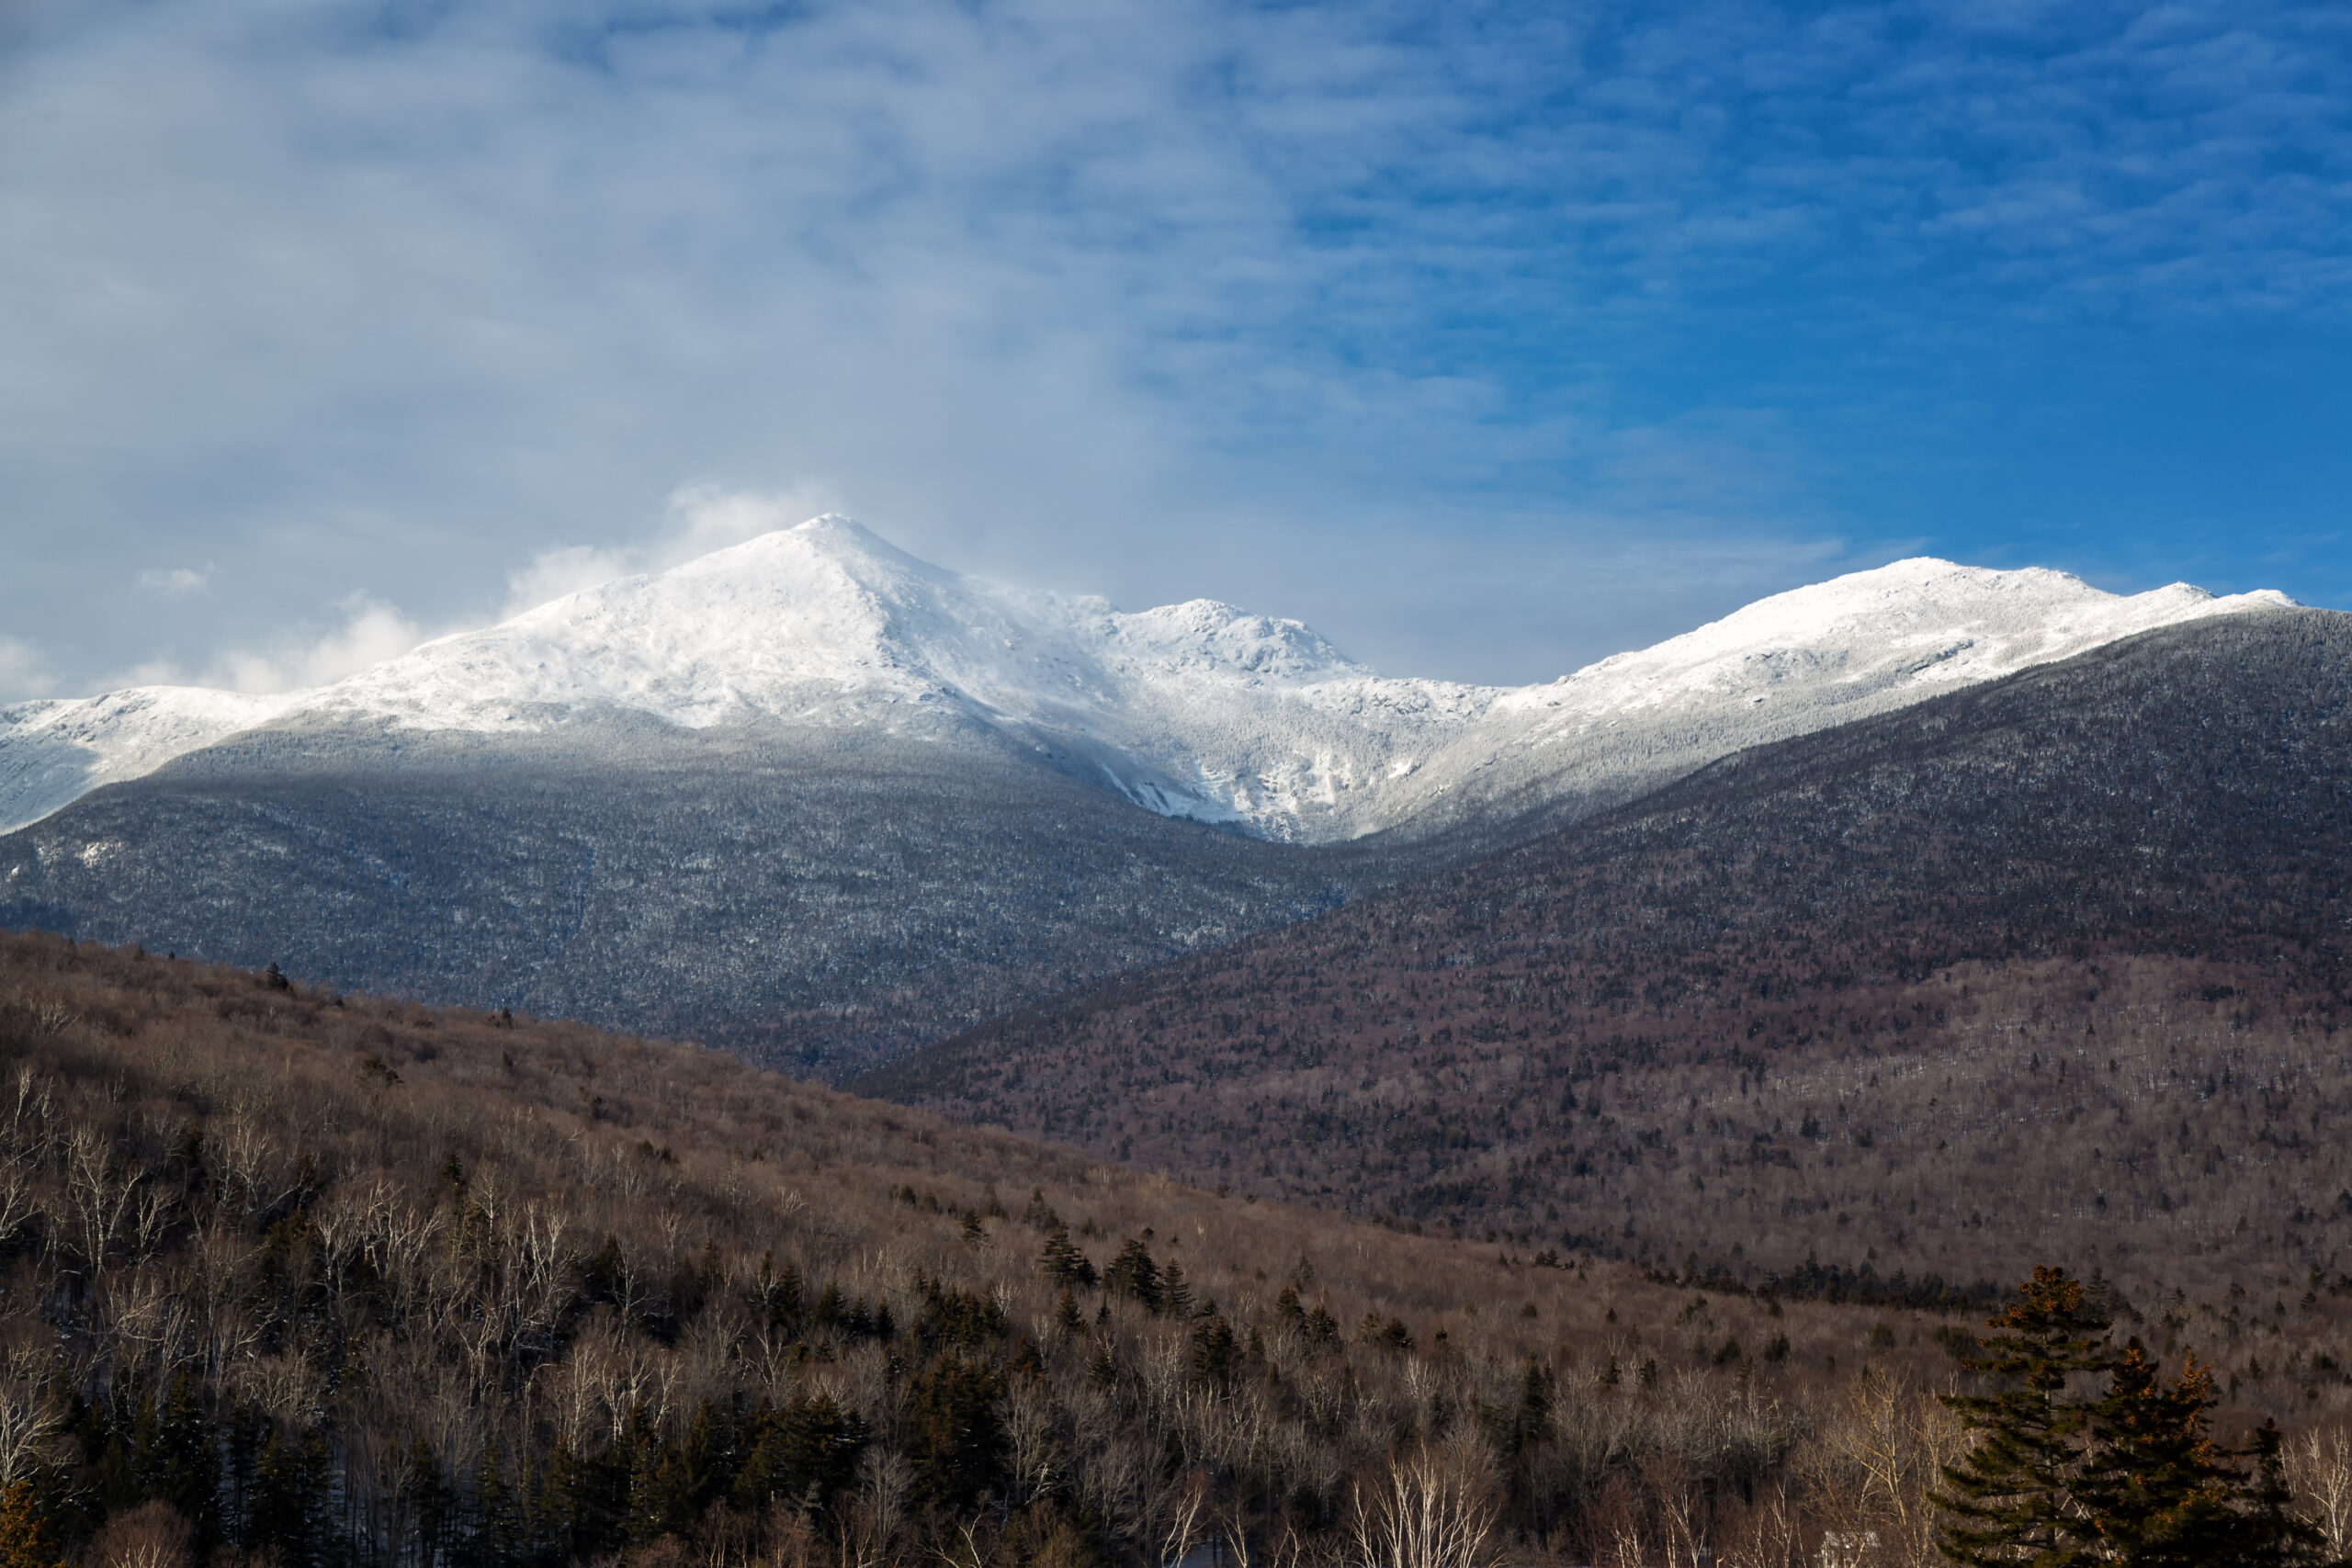 The White Mountains, New Hampshire, USA